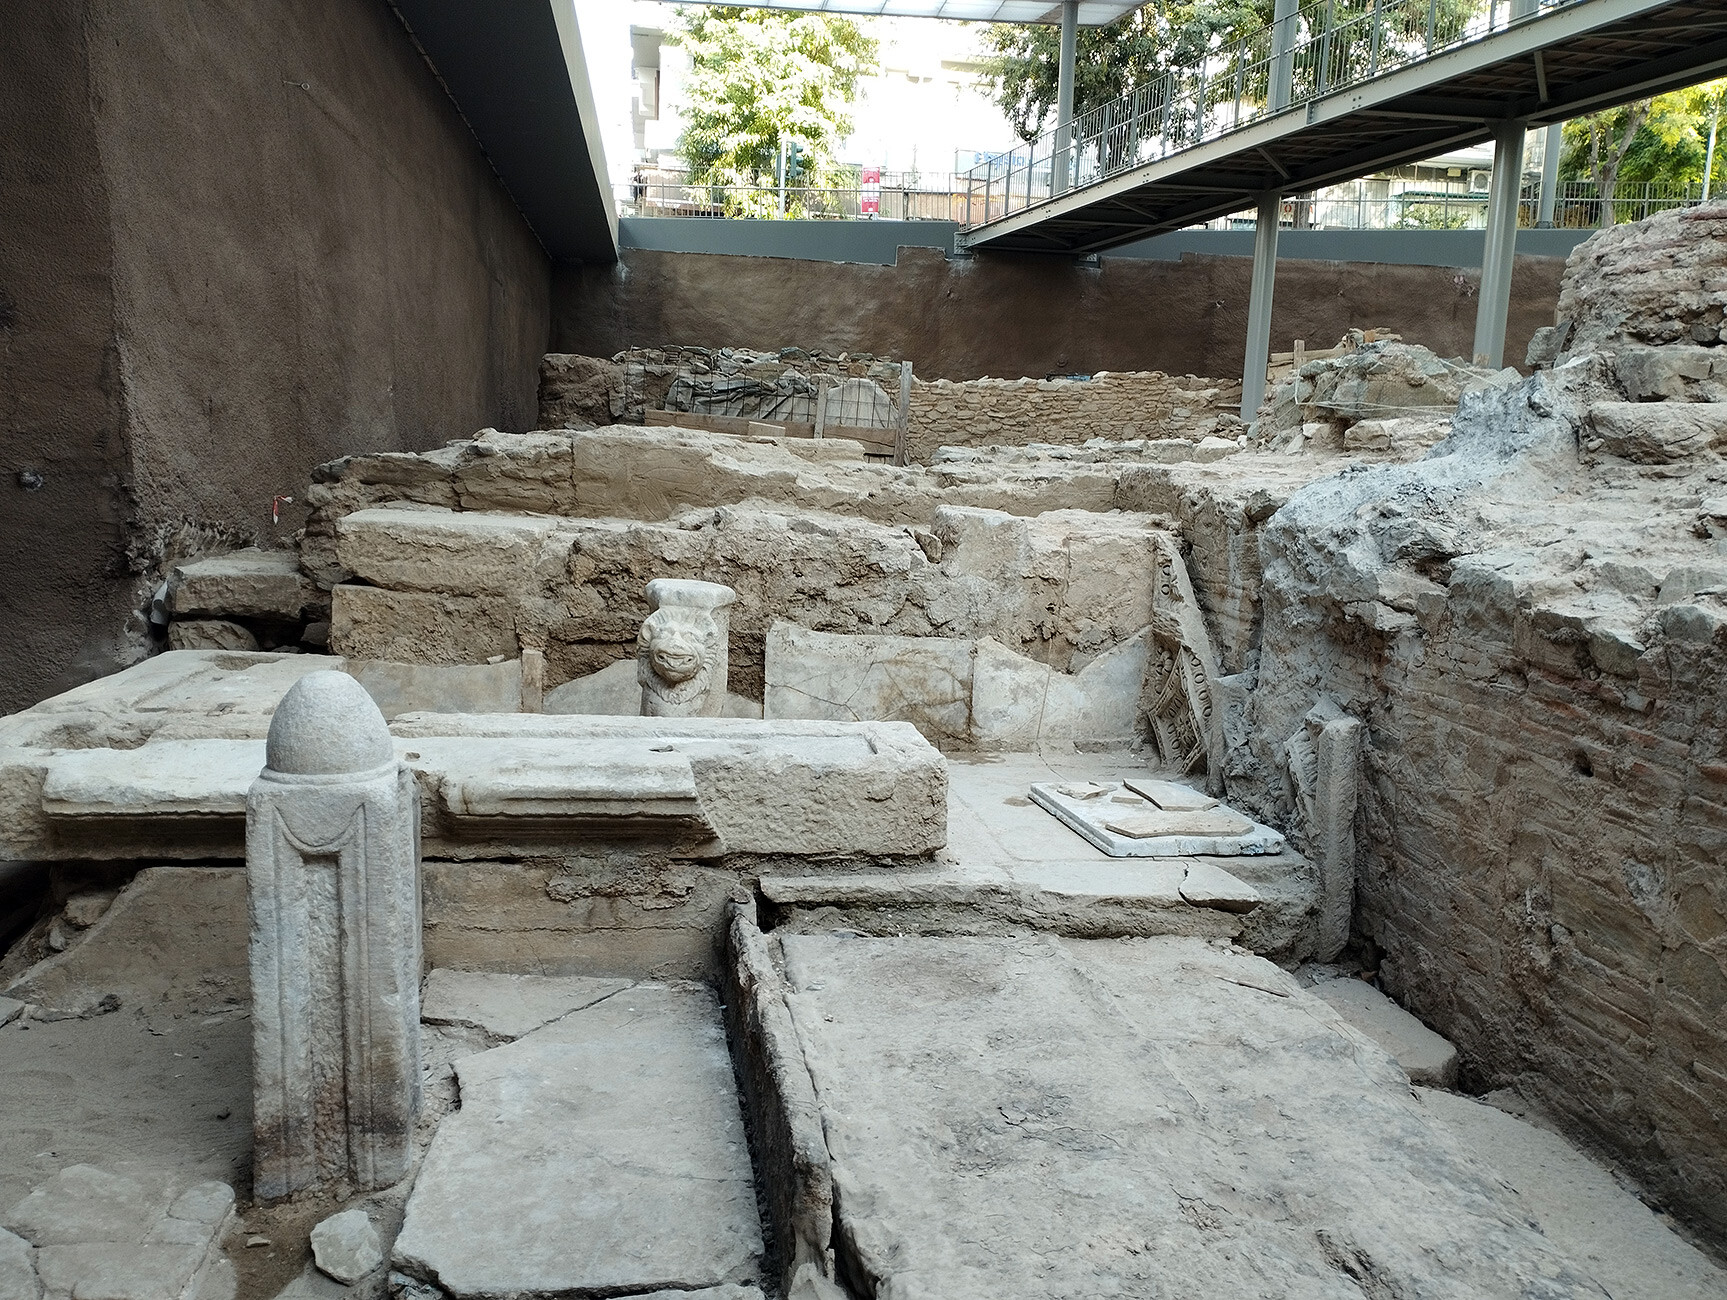 More information about "Πέντε σταθμοί του Μετρό Θεσσαλονίκης έγιναν πάνω σε αρχαιολογικούς χώρους με 300.000 κινητά ευρήματα"